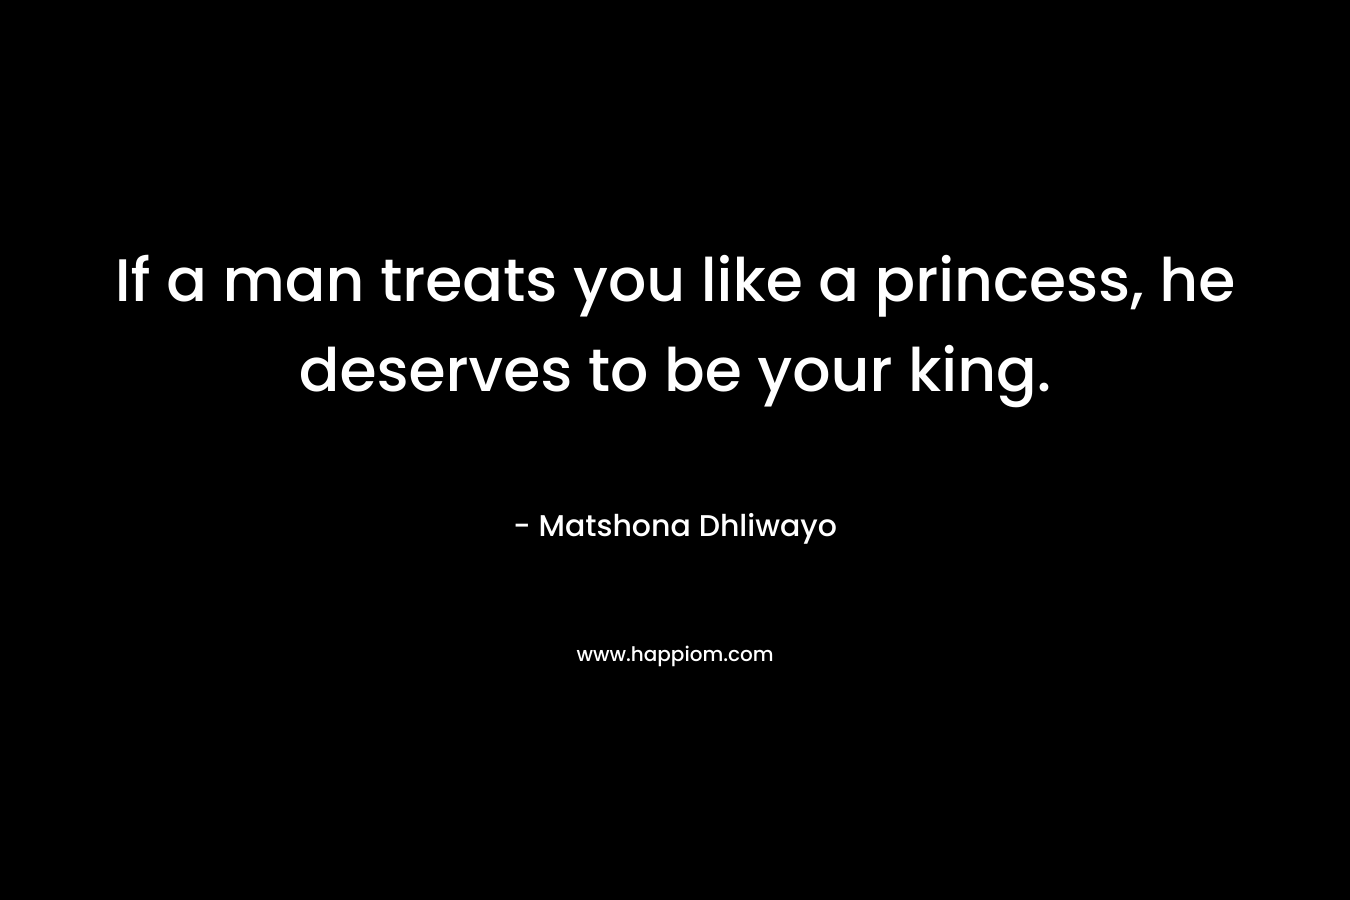 If a man treats you like a princess, he deserves to be your king.